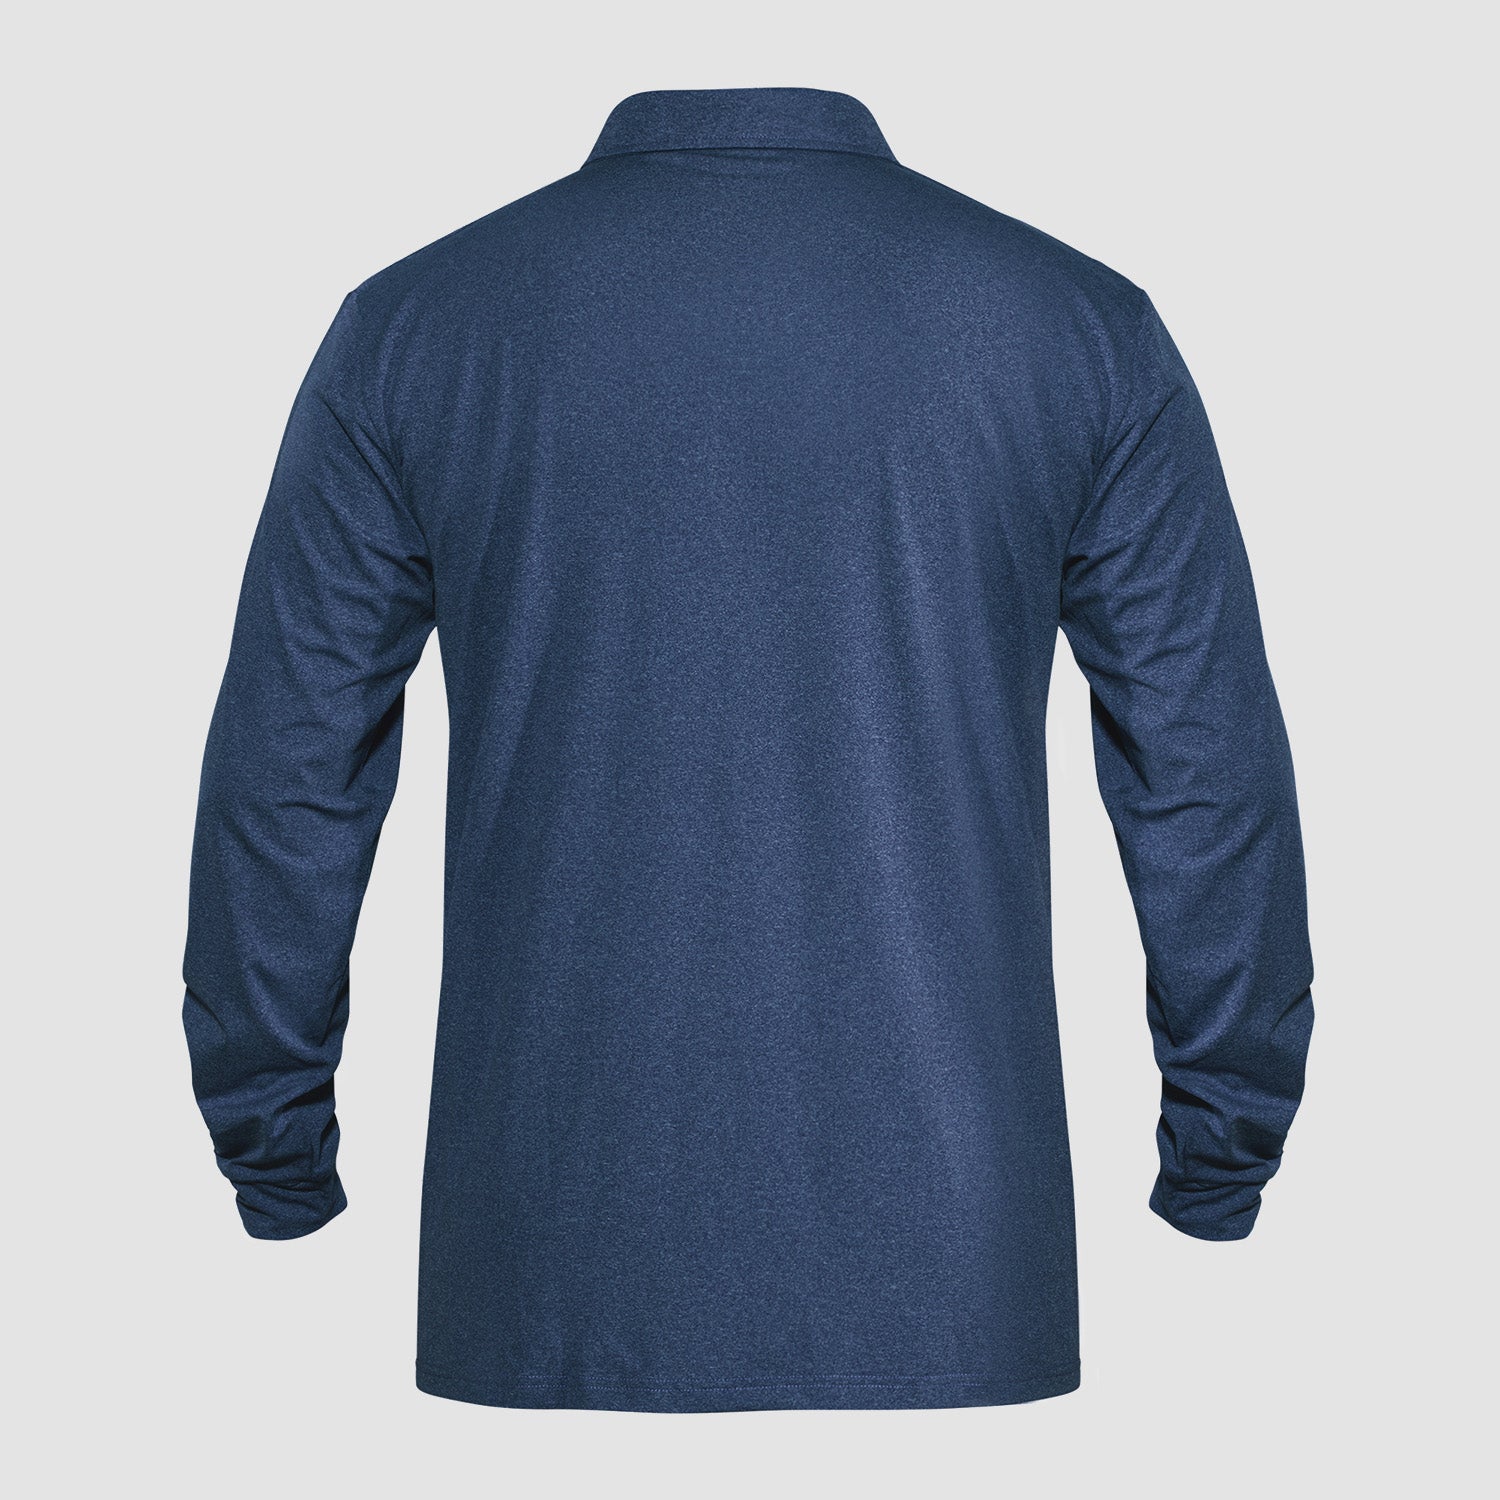 Men's Polo Shirts Long Sleeve Golf Shirts Quick Dry Performance Pique Jersey Sport